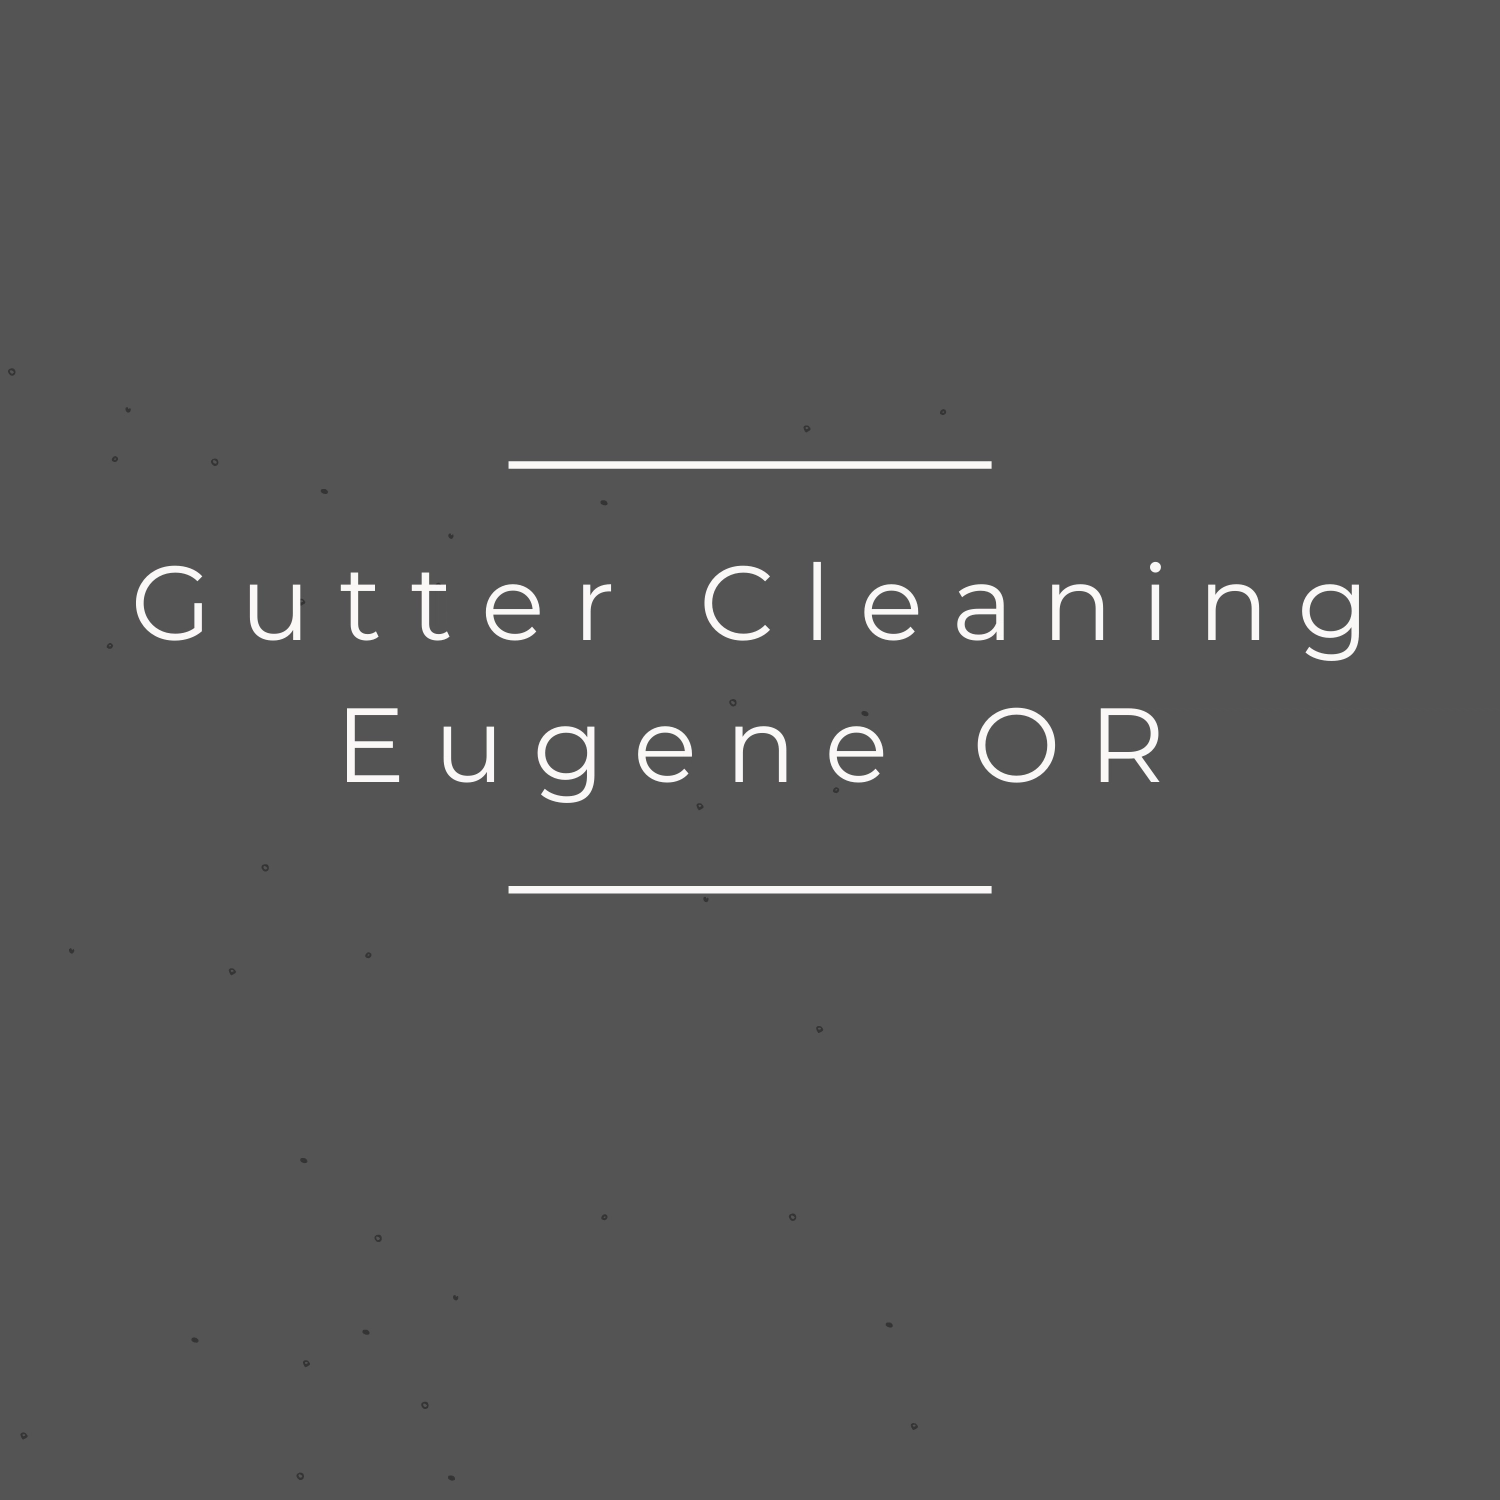 Gutter Cleaning of Eugene OR Logo